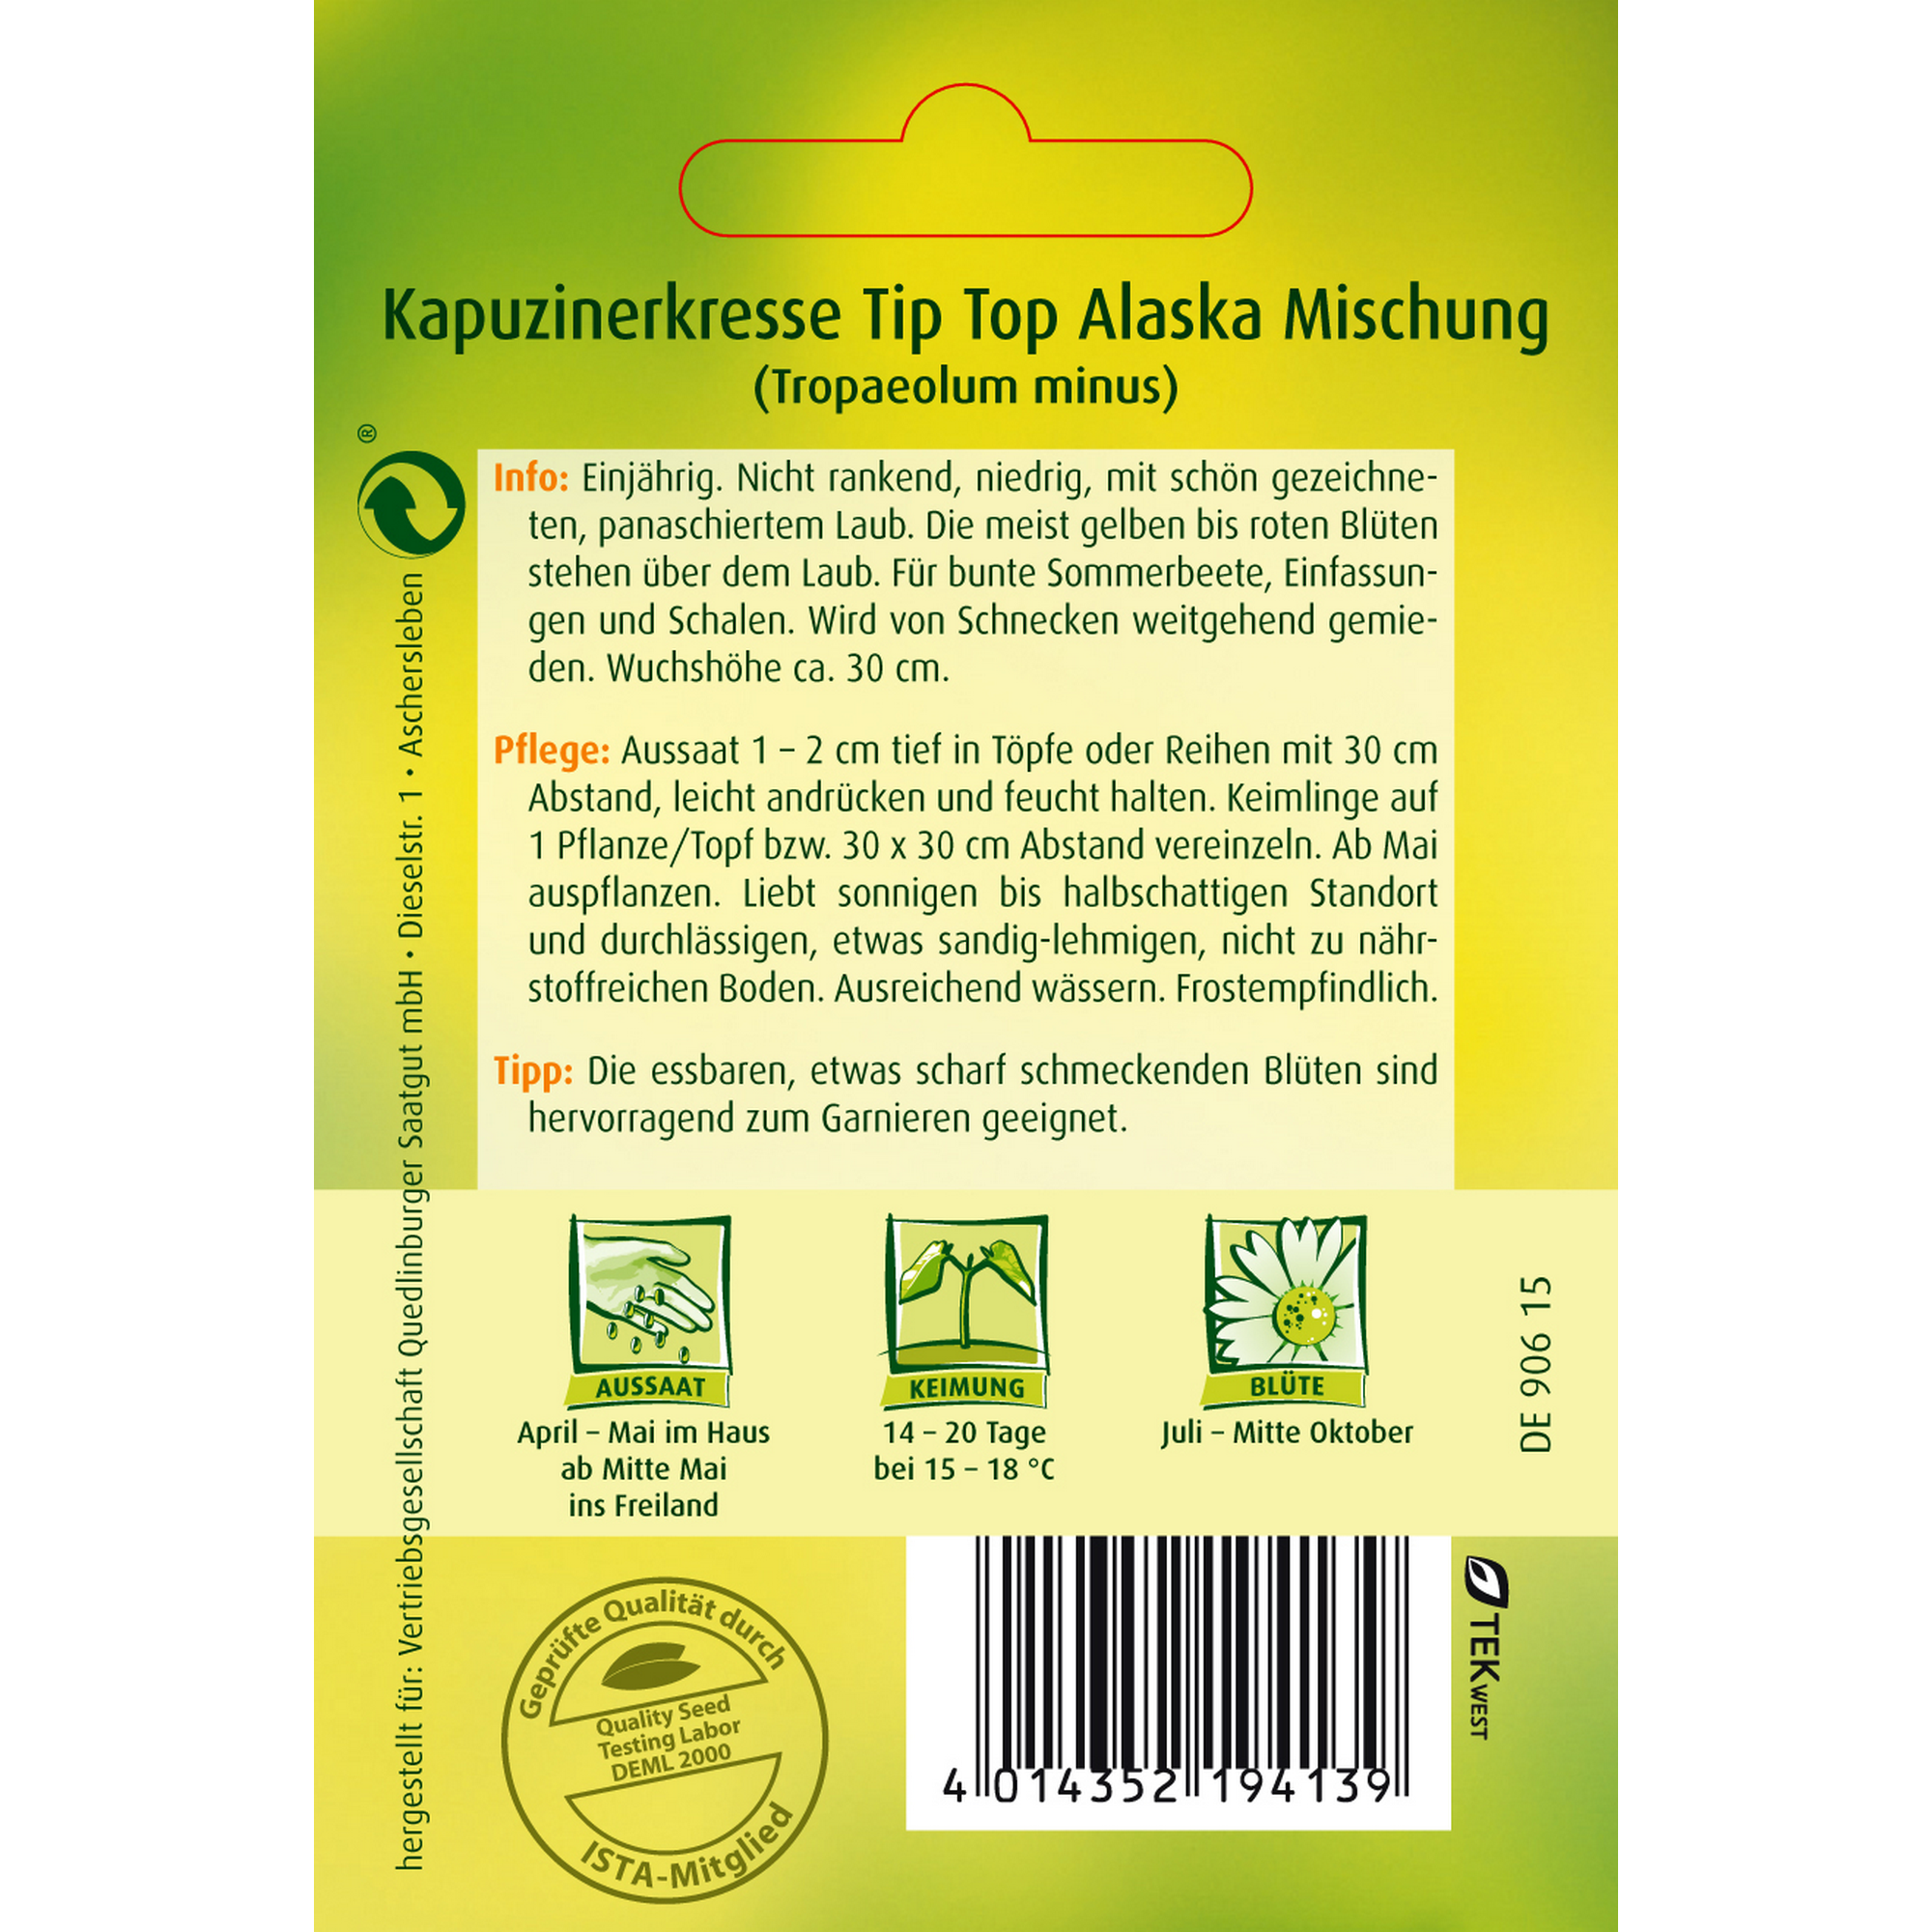 Kapuzinerkresse 'Tip Top Alaska Mischung' + product picture